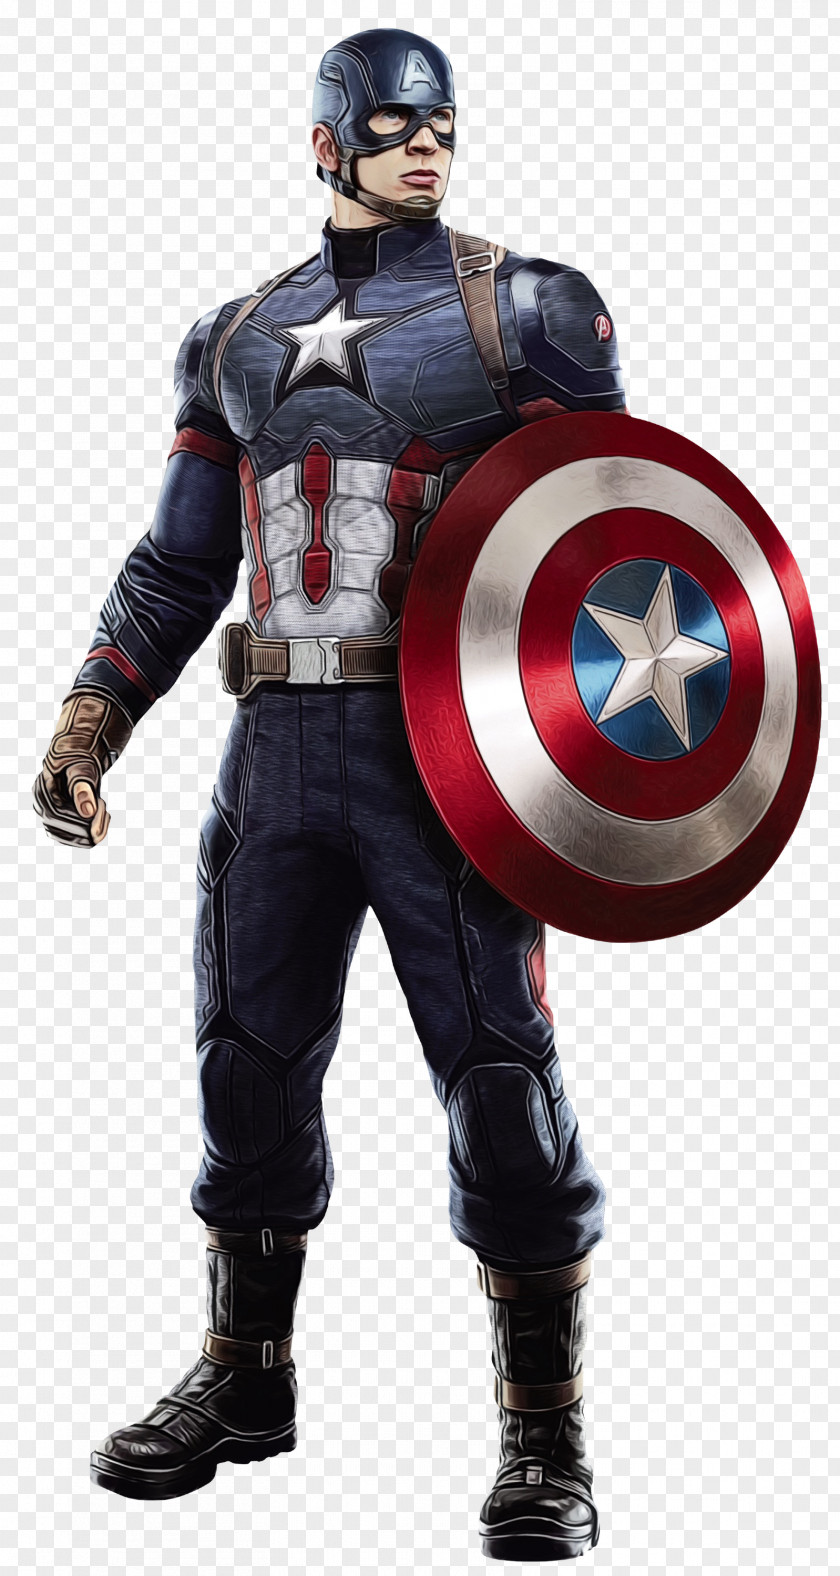 Captain America's Shield Iron Man Marvel Cinematic Universe S.H.I.E.L.D. PNG